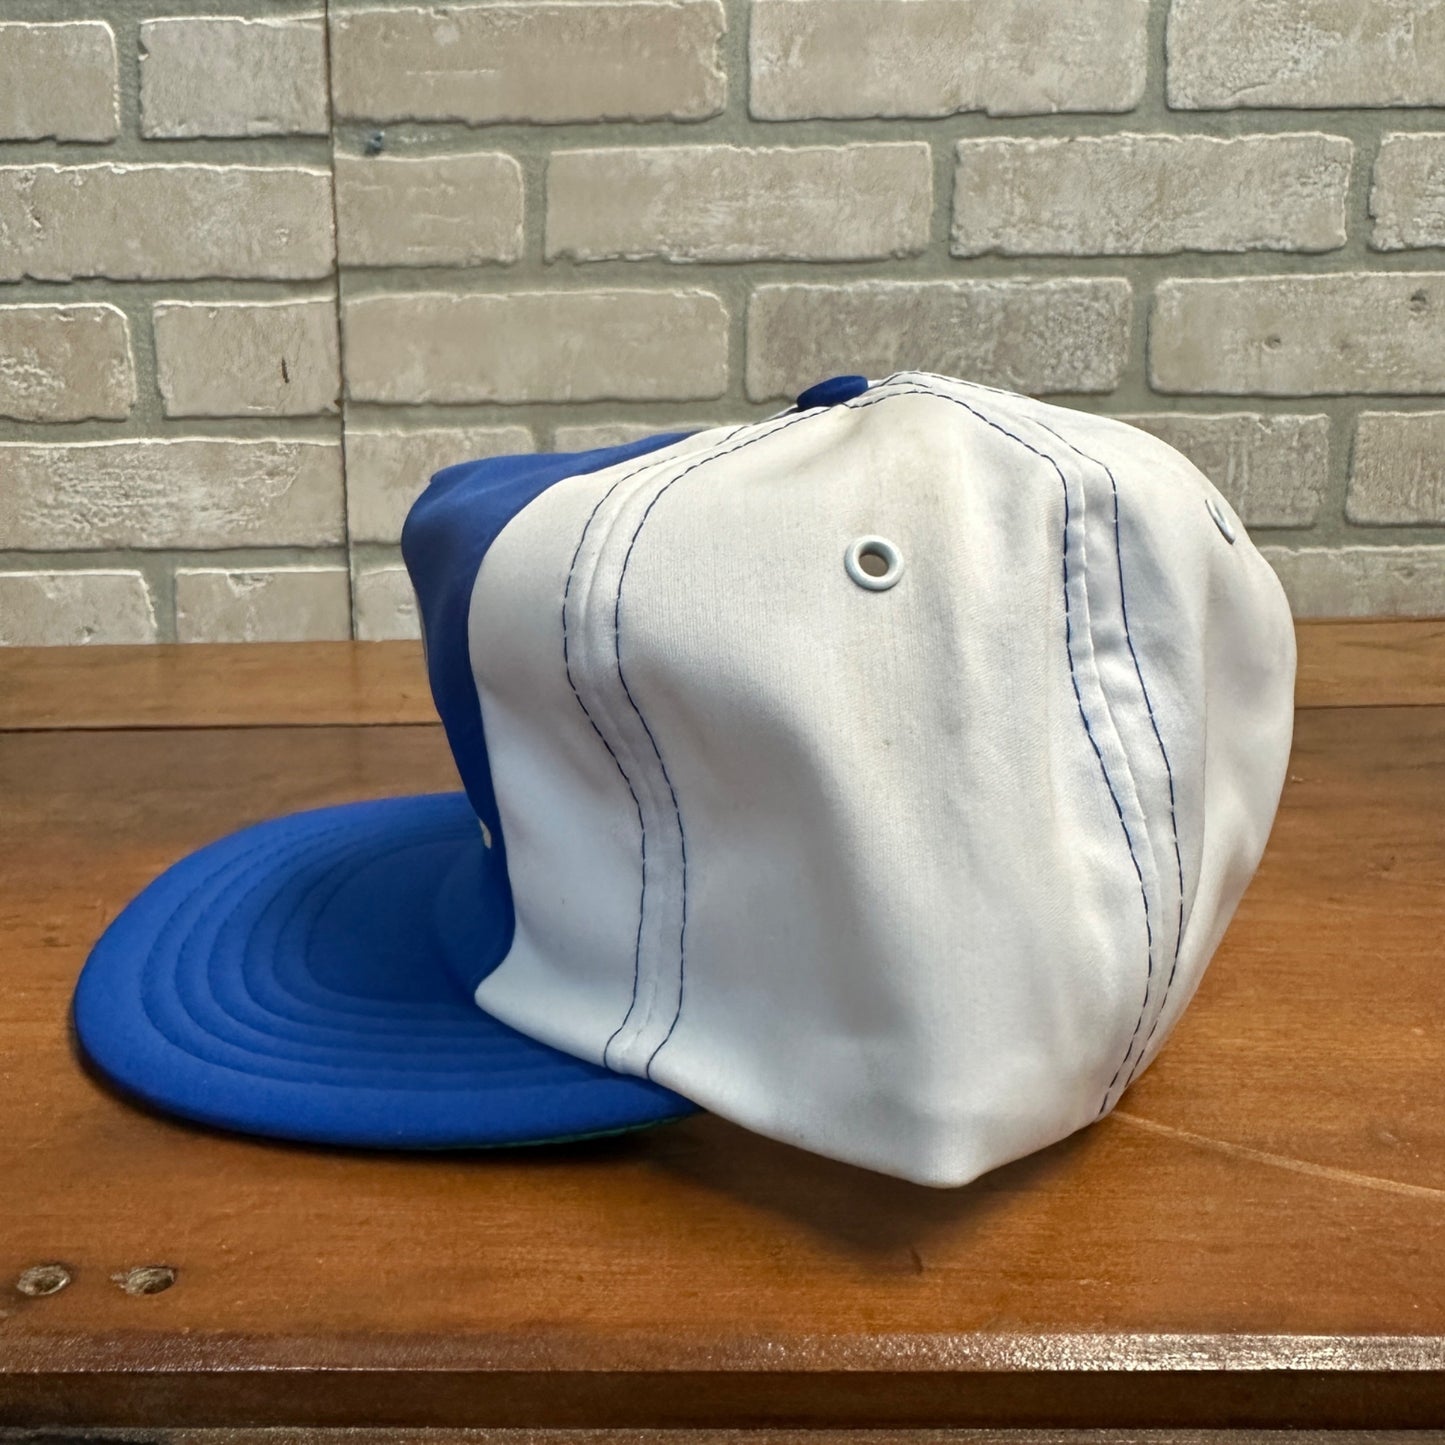 Vintage Makita Tools Blue White Retro Snapback Trucker Hat Cap